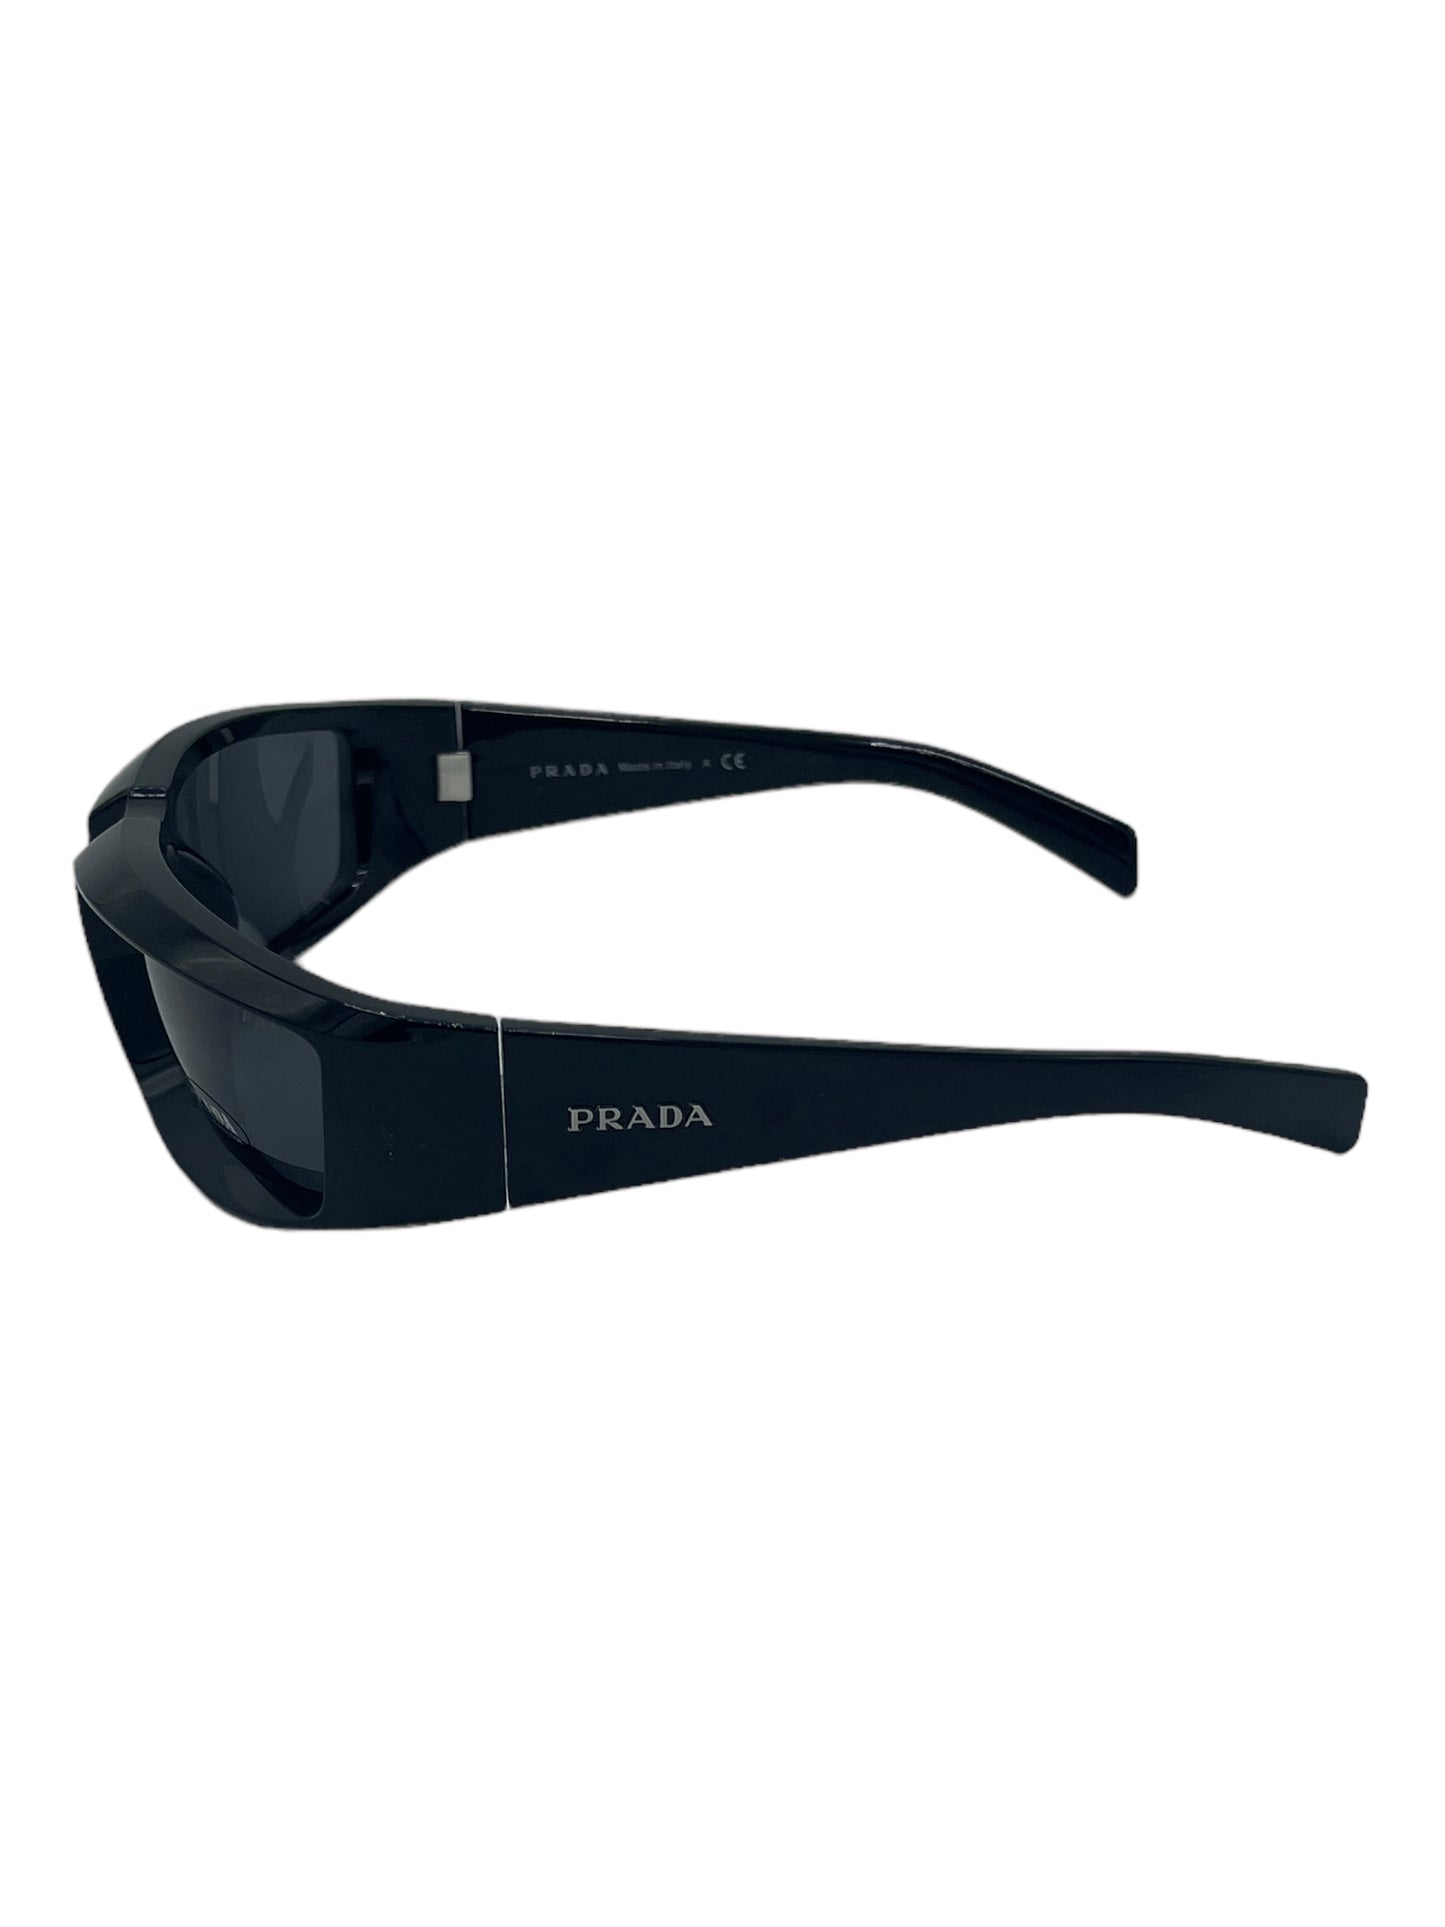 Prada Black Turbo Sunglasses